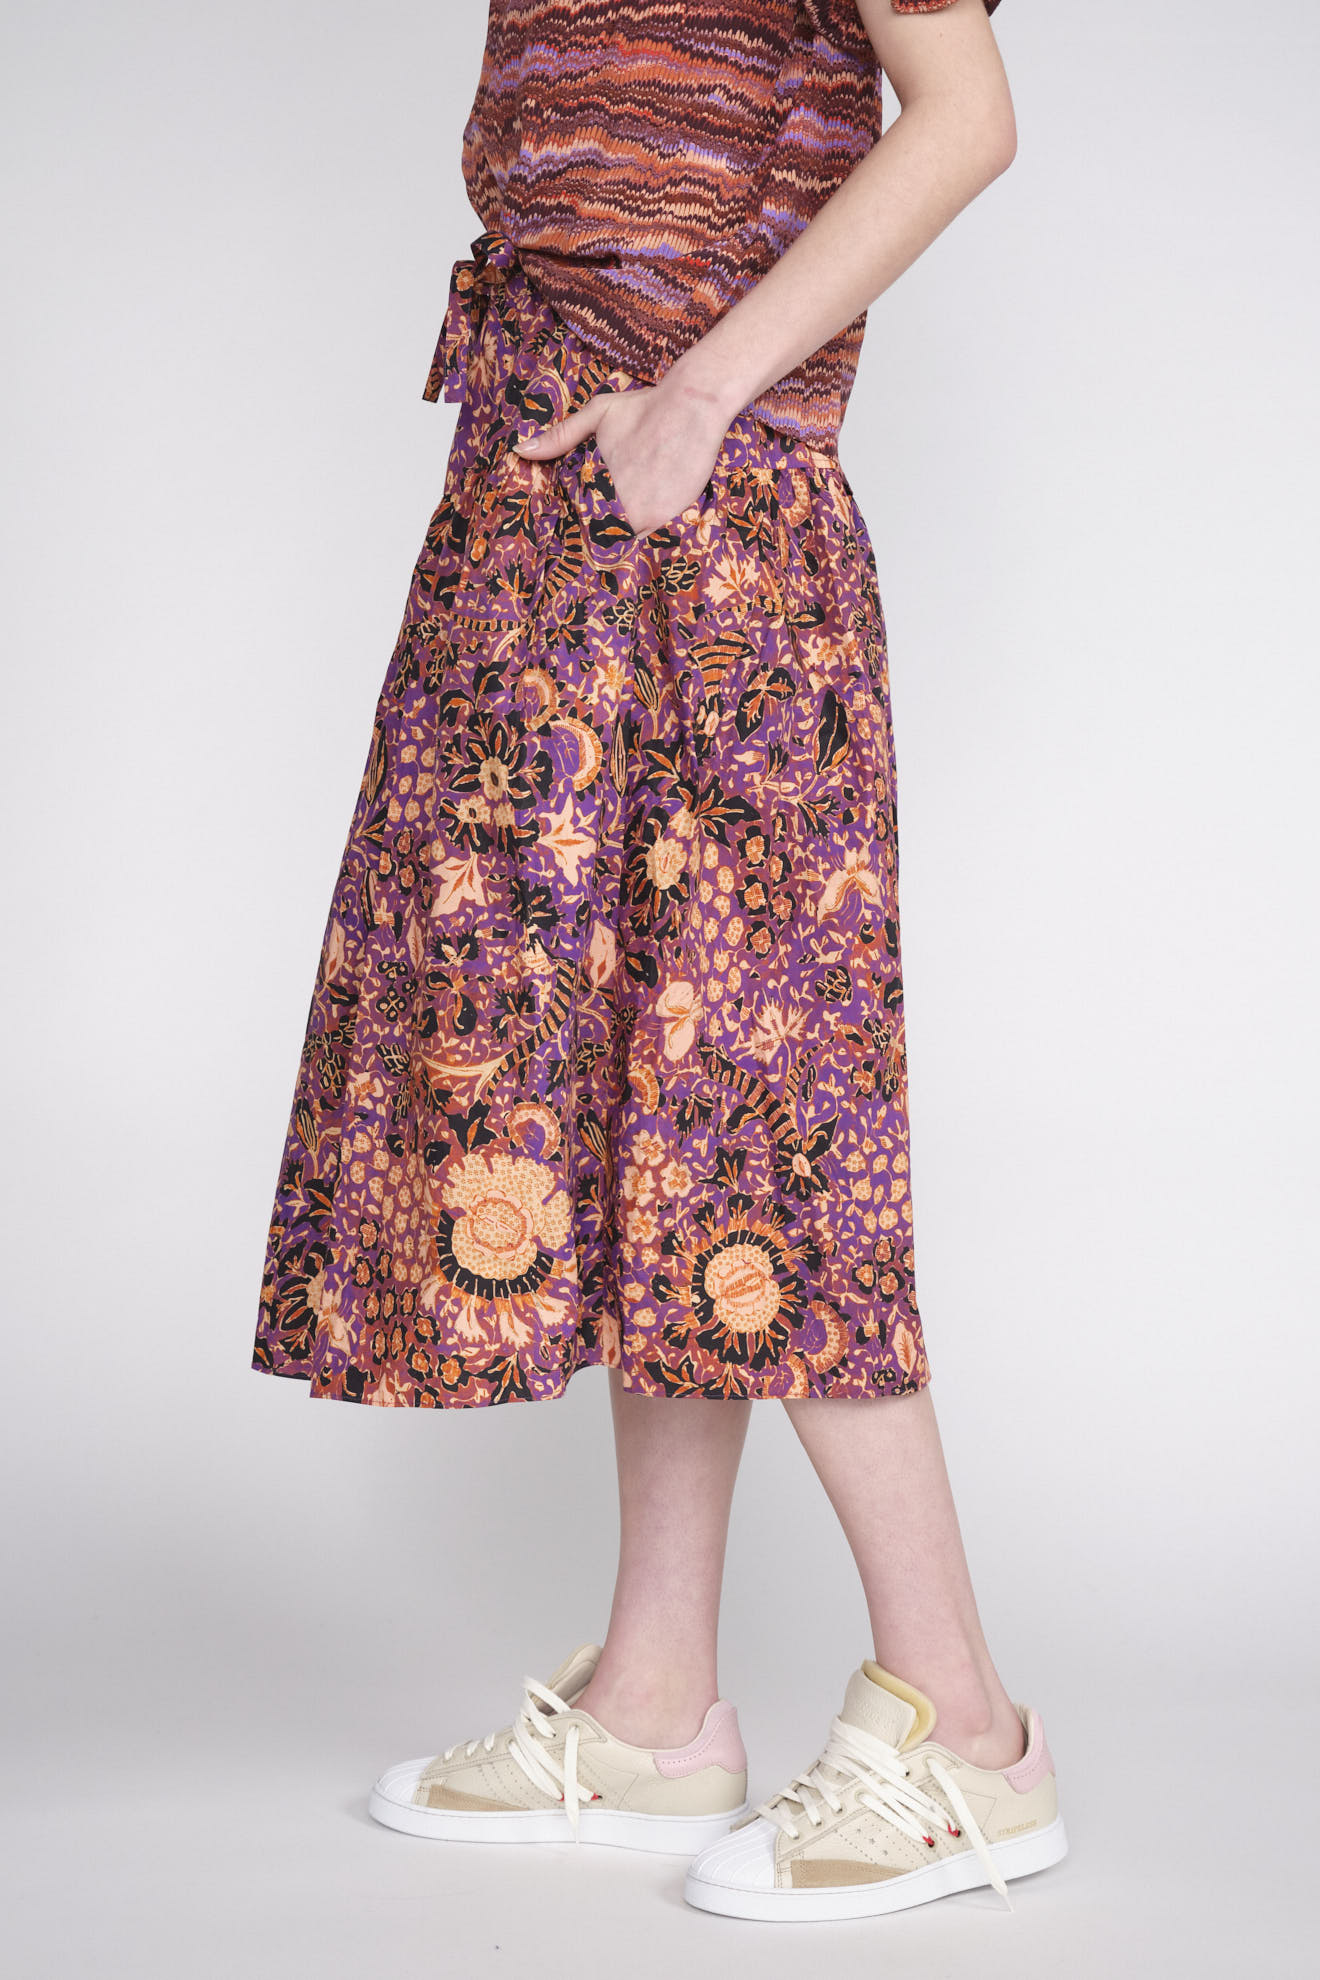 Ulla Johnson Fernanda - Midi skirt with playful floral pattern | loui.rocks